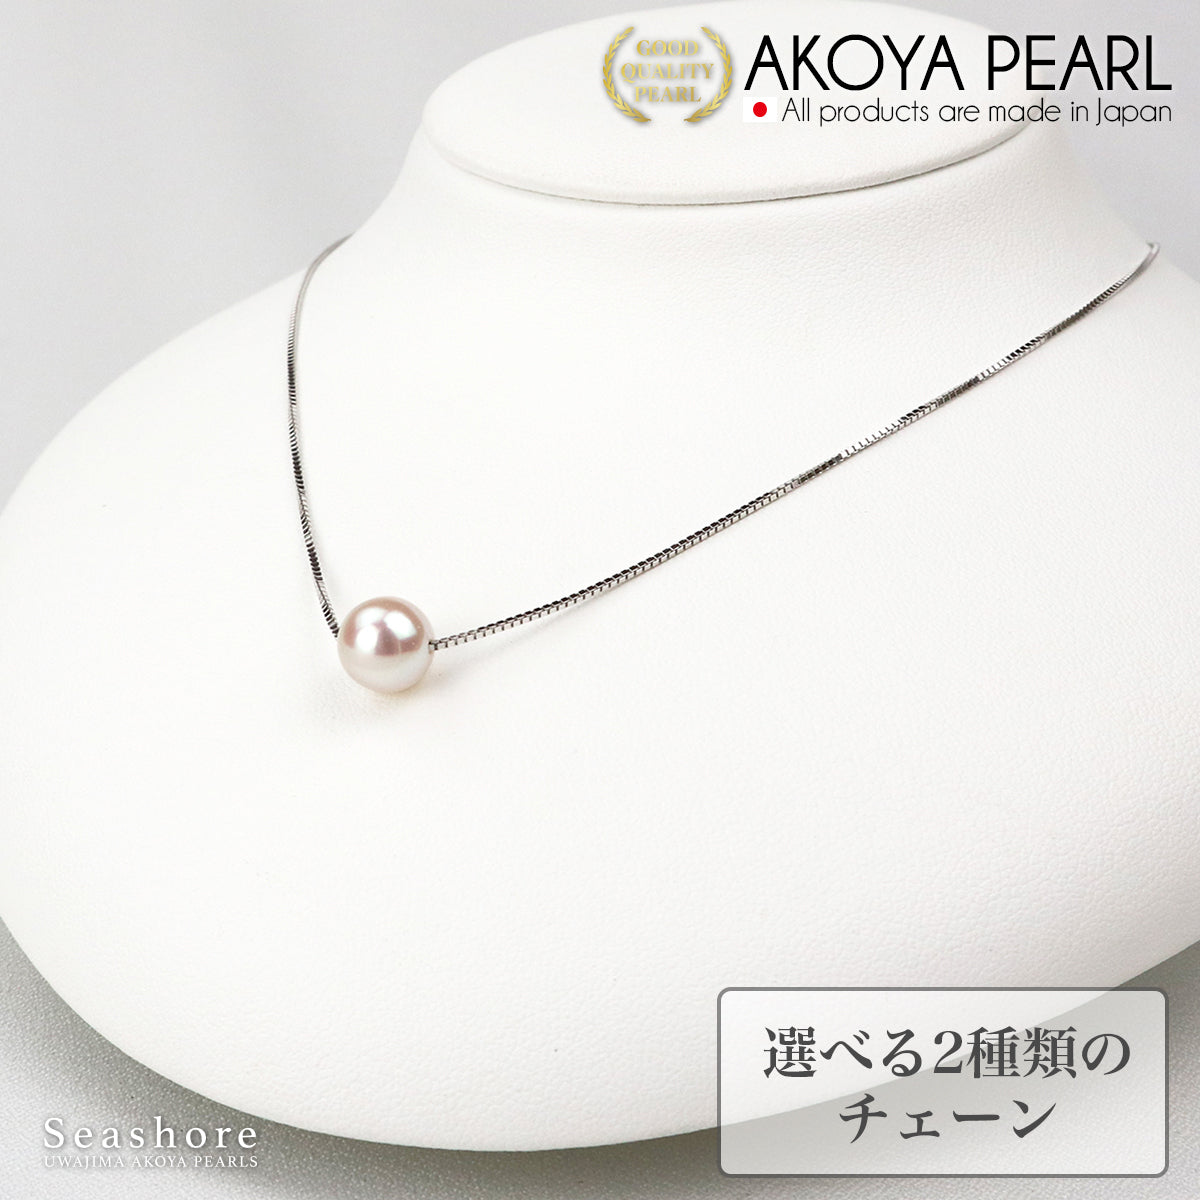 Akoya Pearl Through Necklace [8.0-9.0mm] SV925 Venetian Chain Pearl Accessory